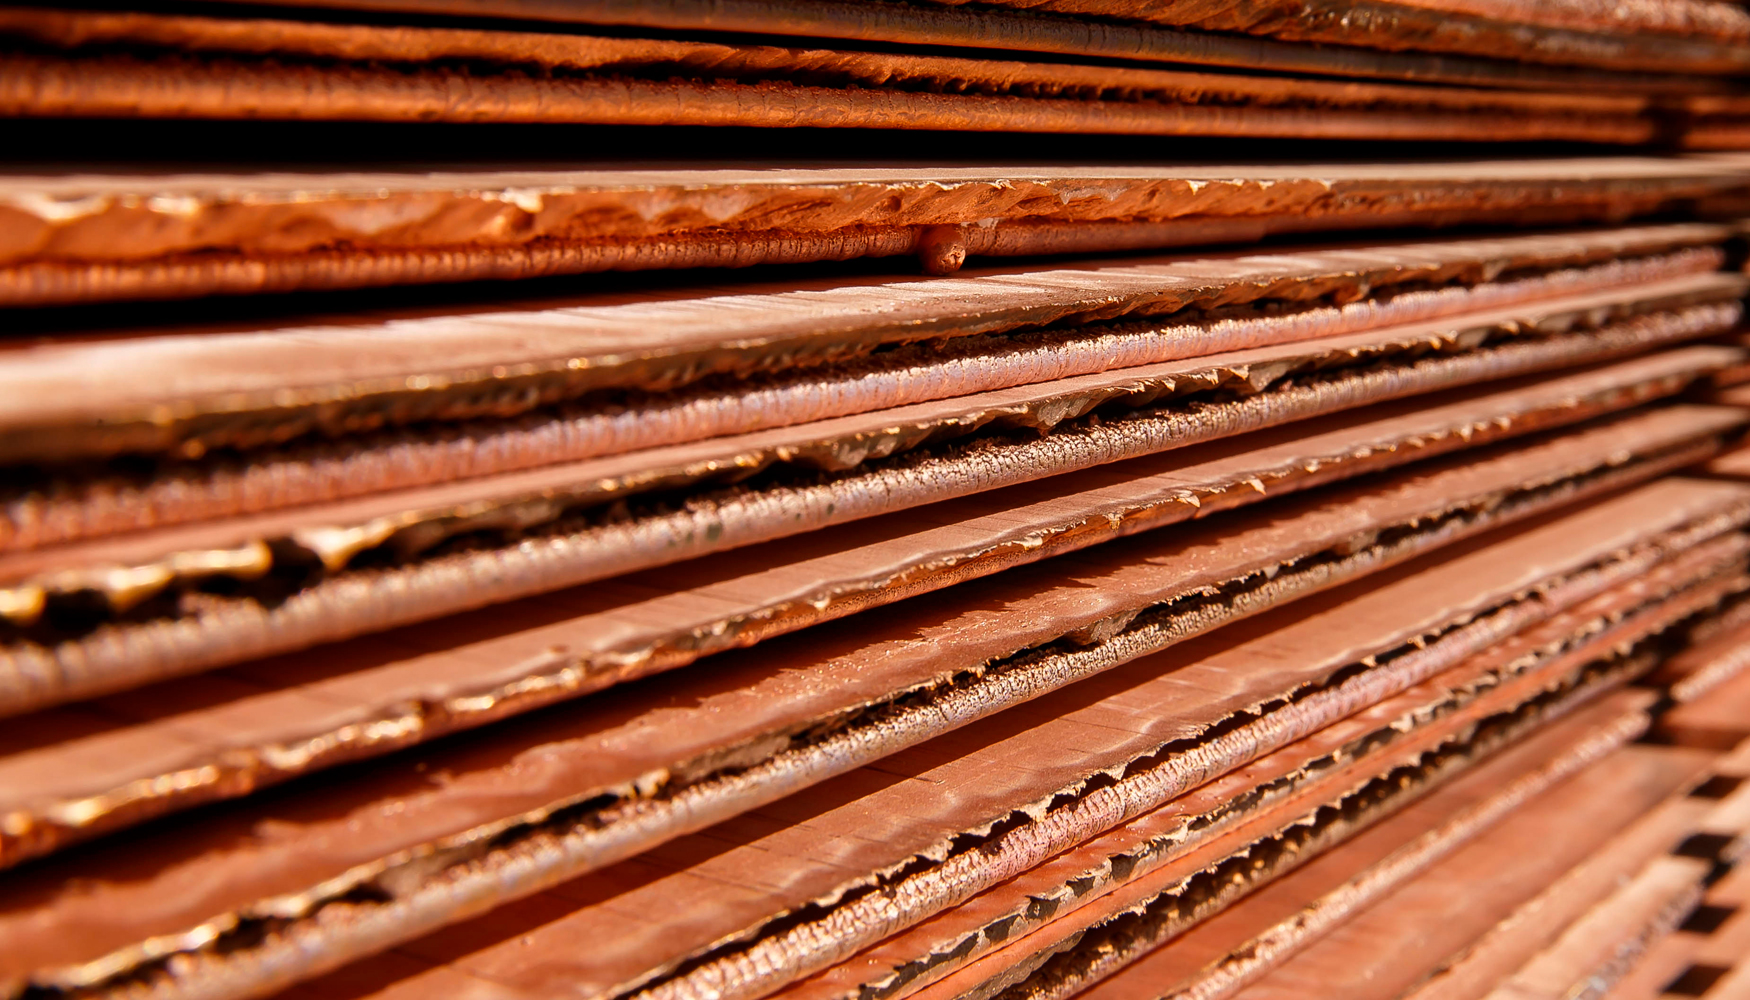 El producto final de Cobre Las Cruces: ctodos de cobre de una pureza del 99,999%